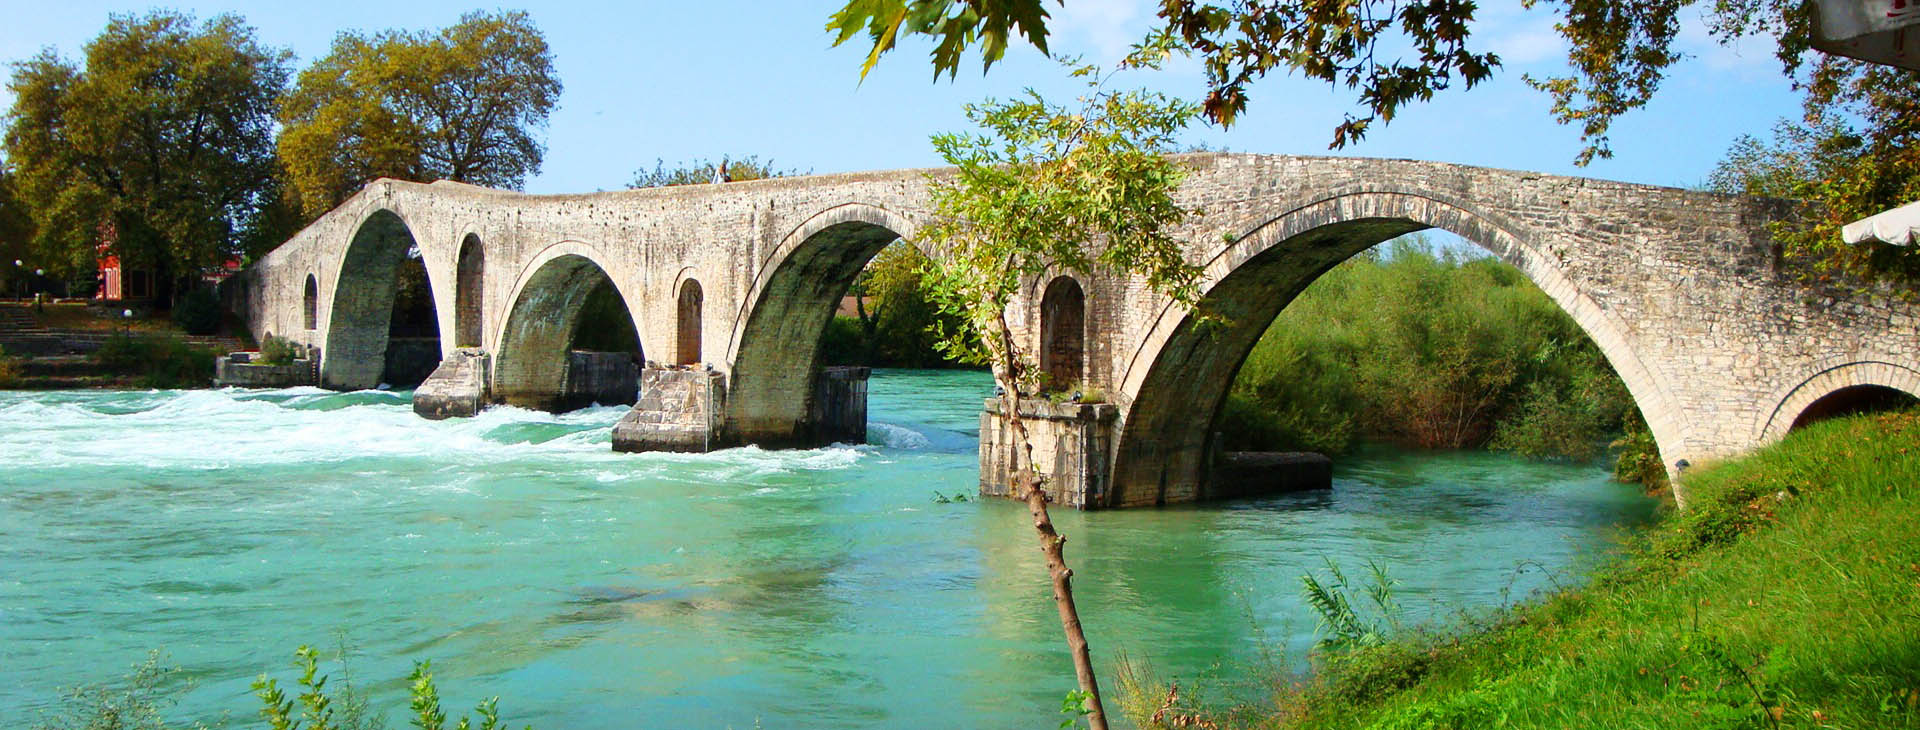 Historical bridge of Arta